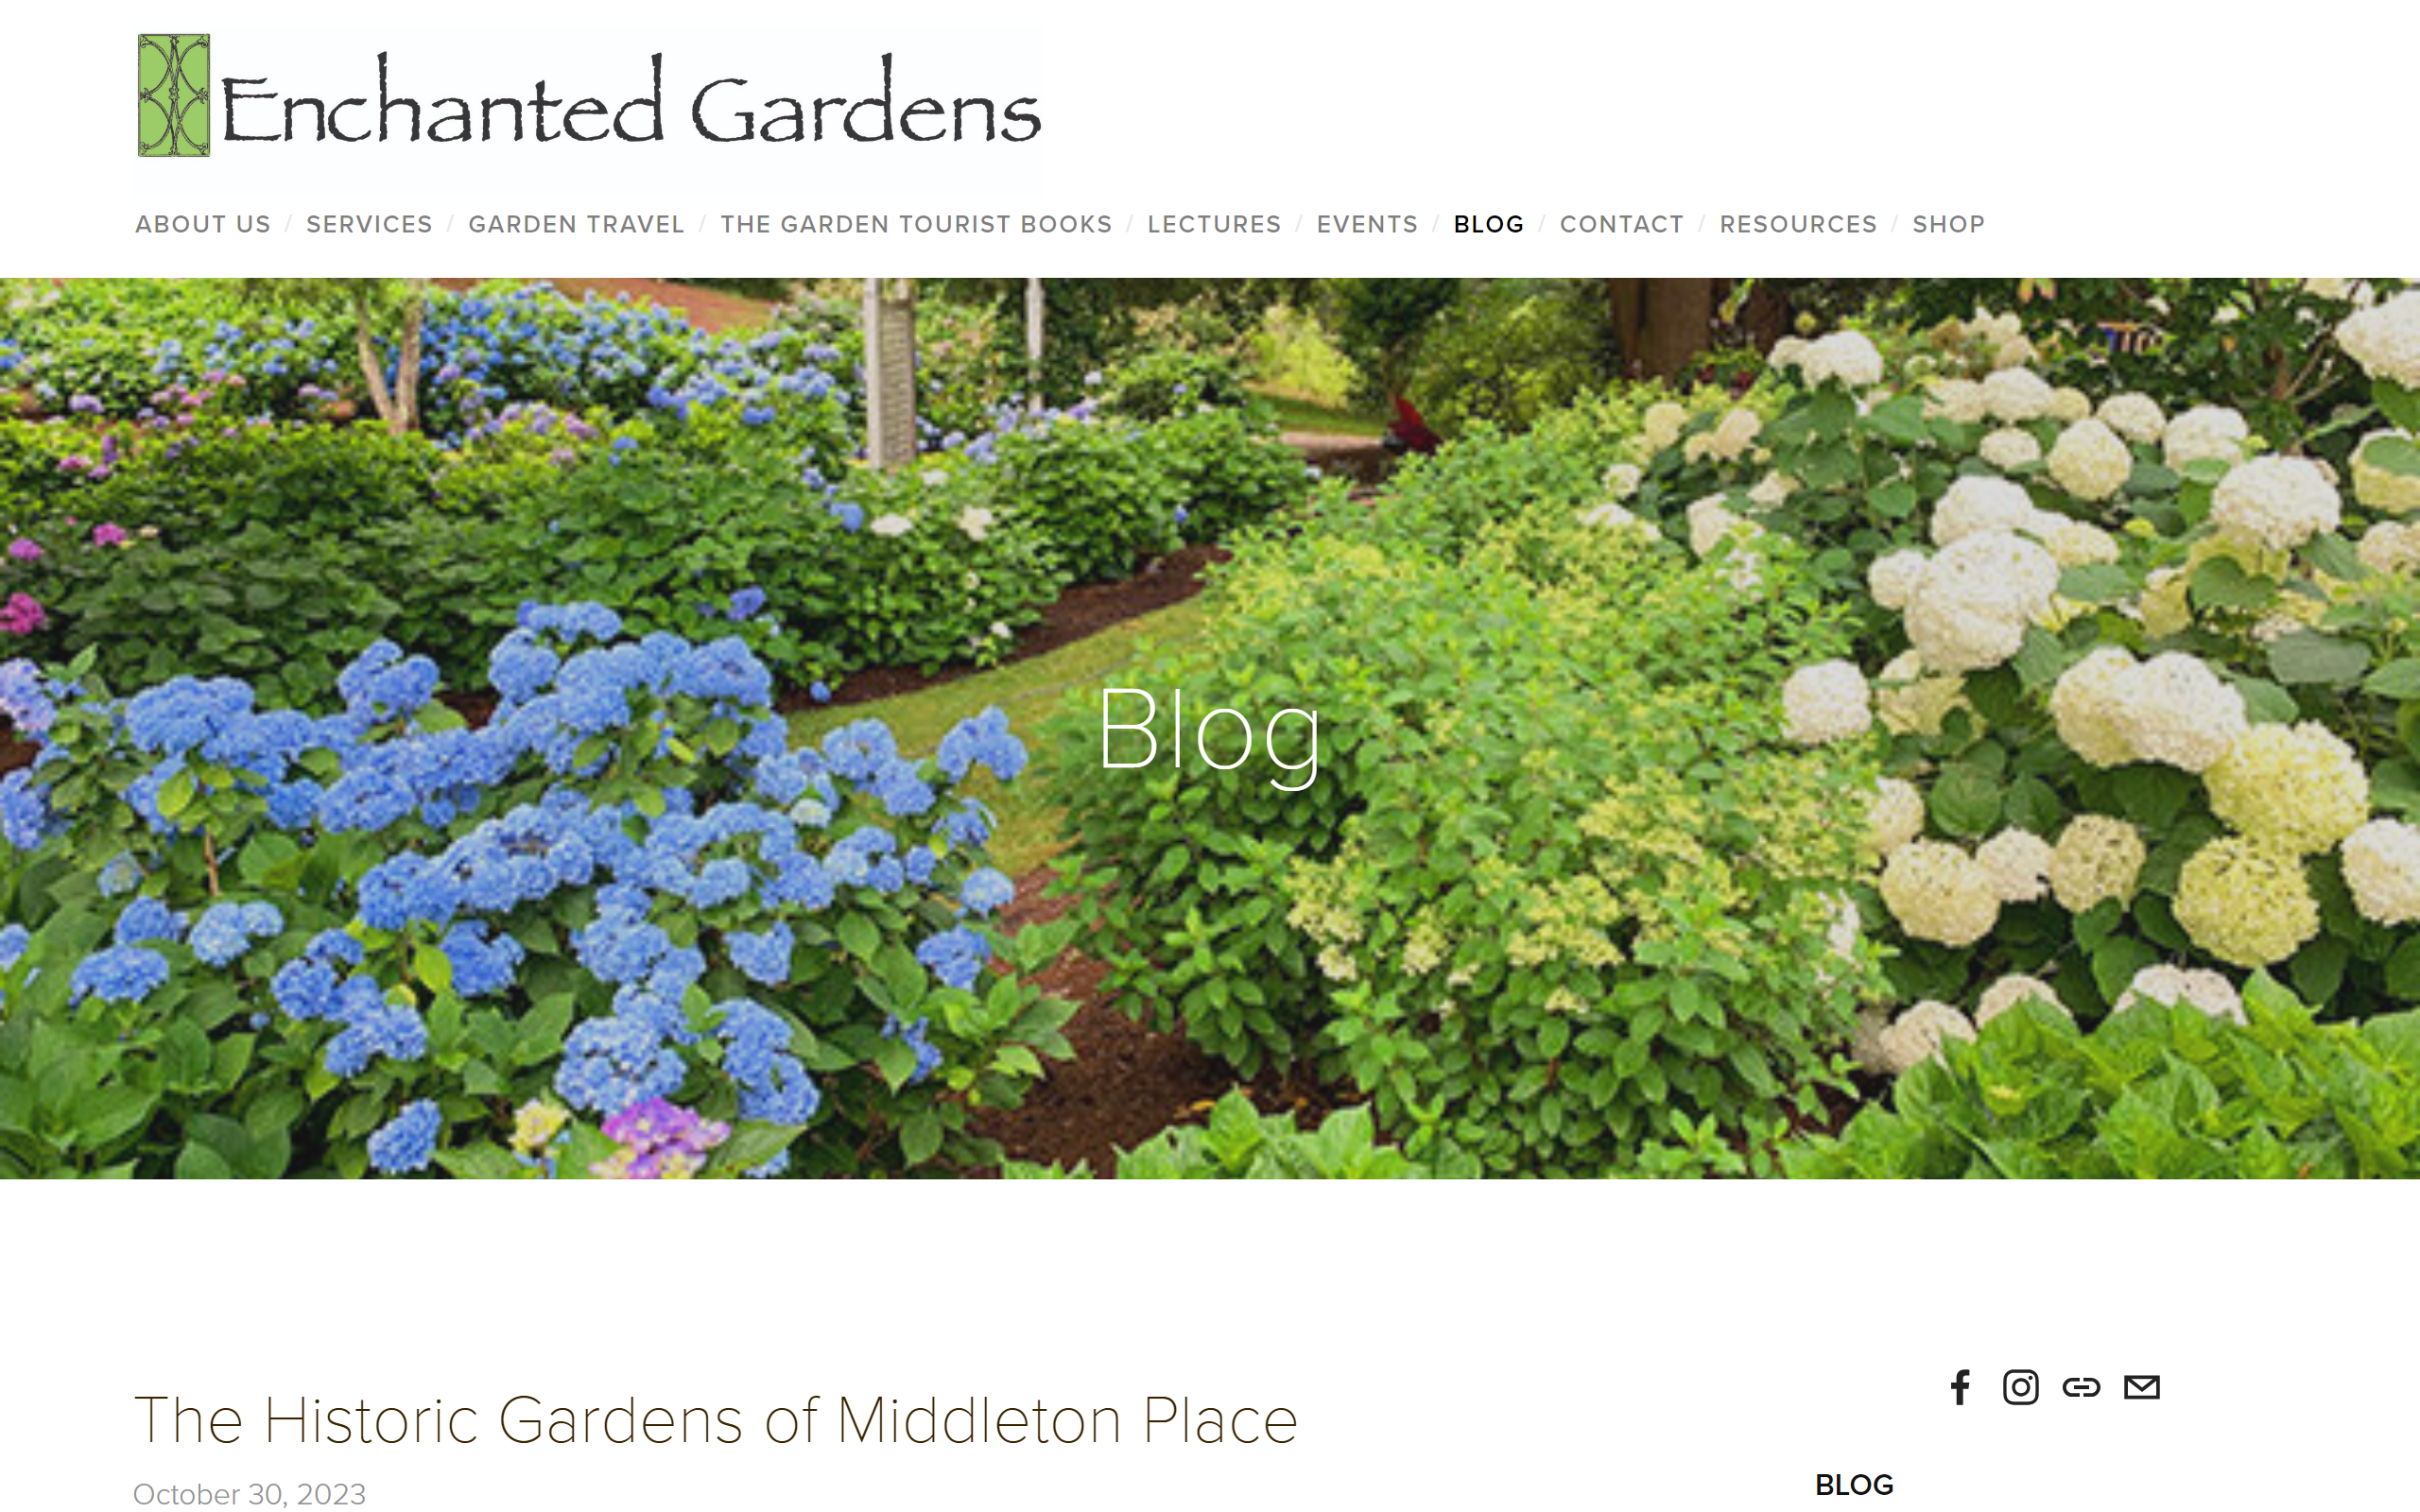 Enchanted Gardens gardening blog